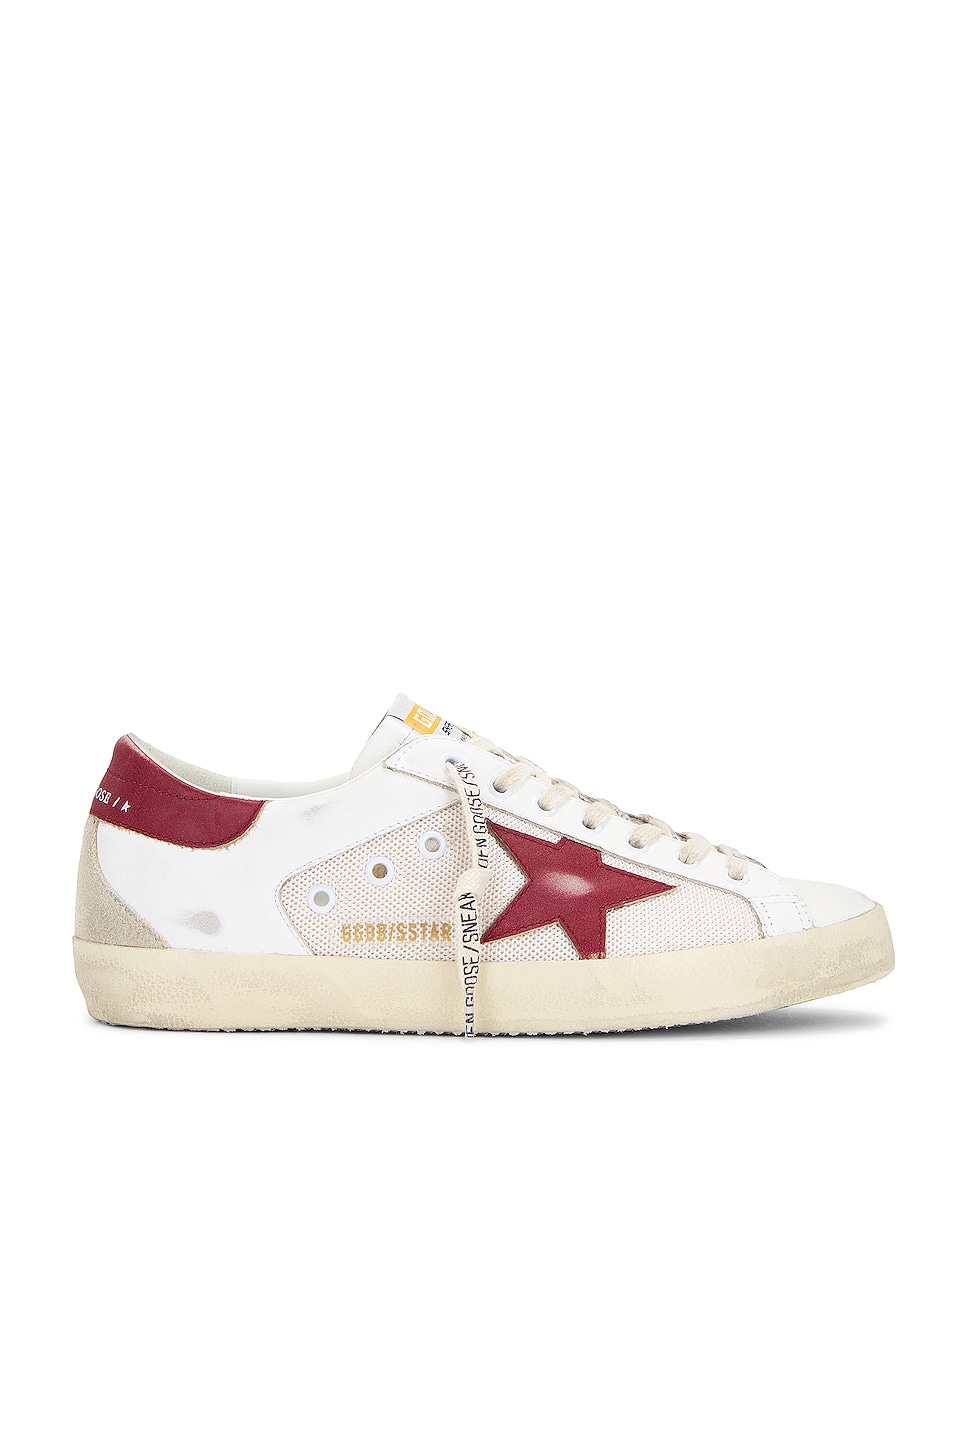 Image 1 of Golden Goose Super Star Sneaker In Cream, Red, White & Beige in Cream, Red, White & Beige